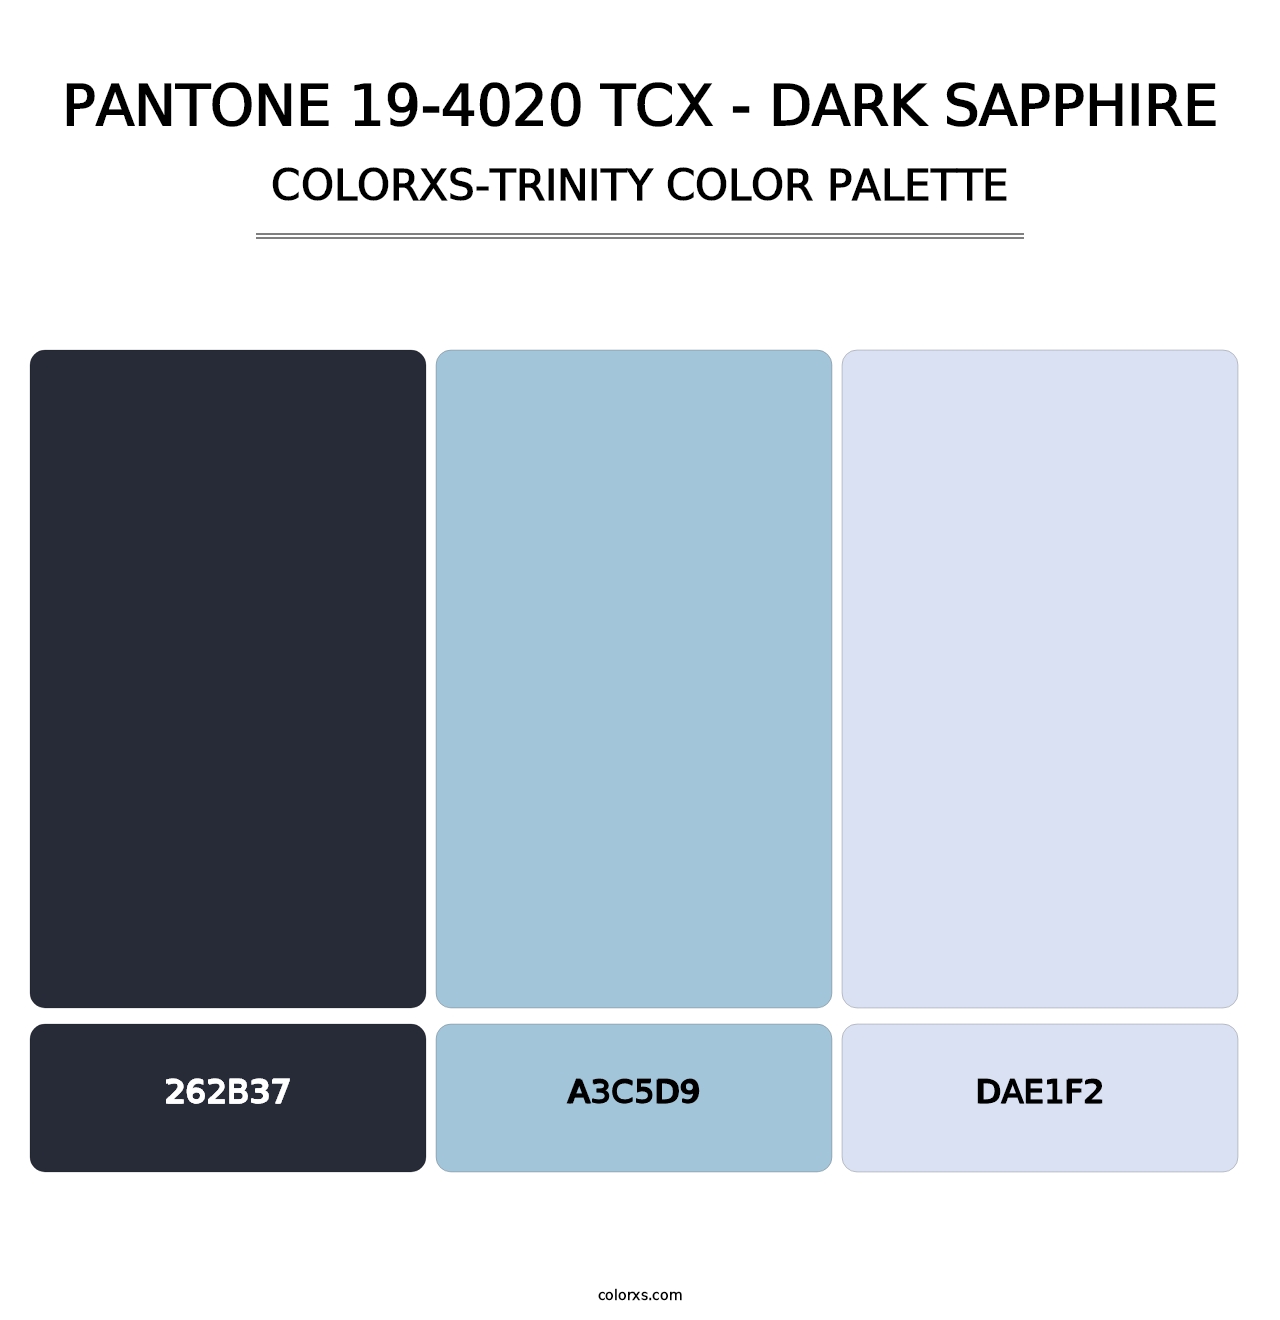 PANTONE 19-4020 TCX - Dark Sapphire - Colorxs Trinity Palette